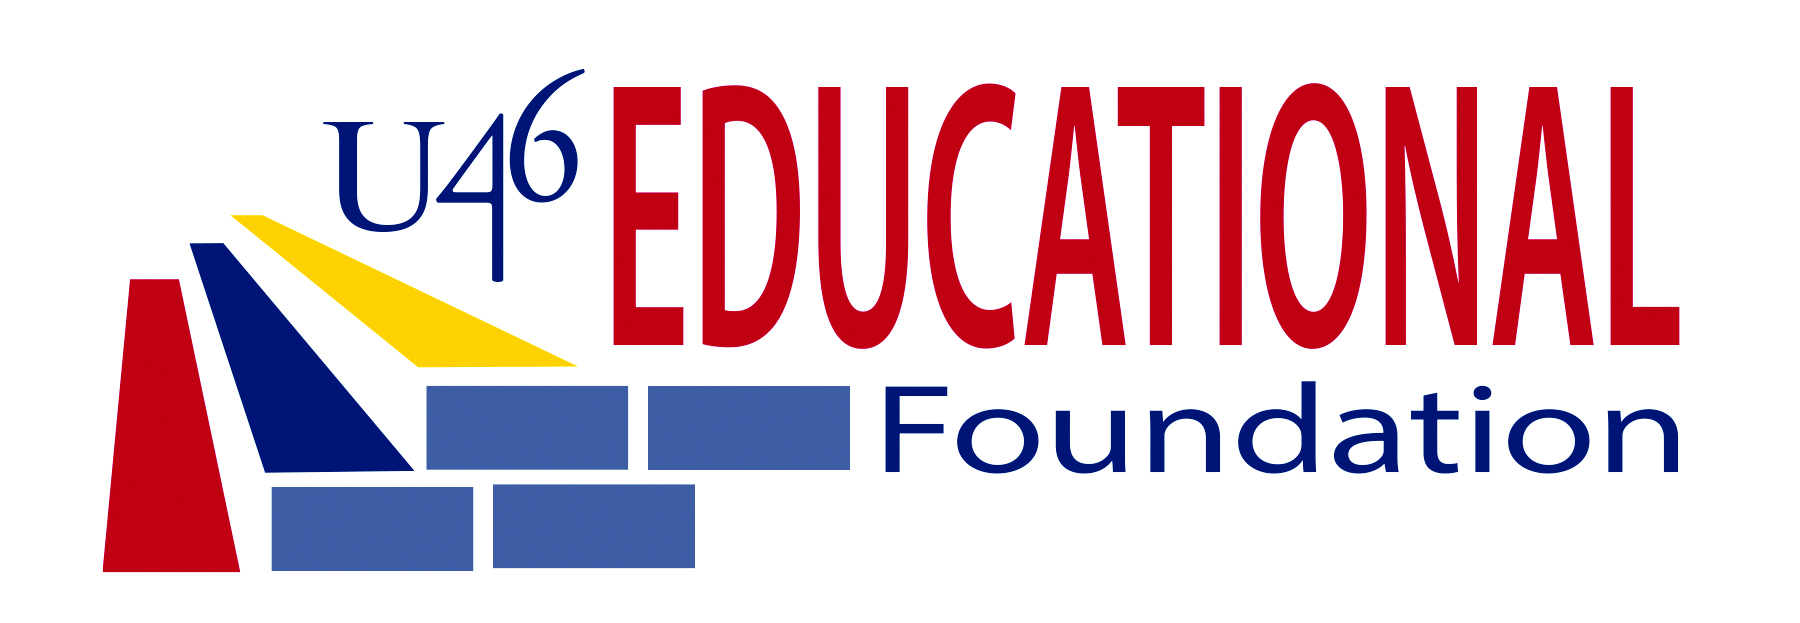 U46 Educational Foundation Logo